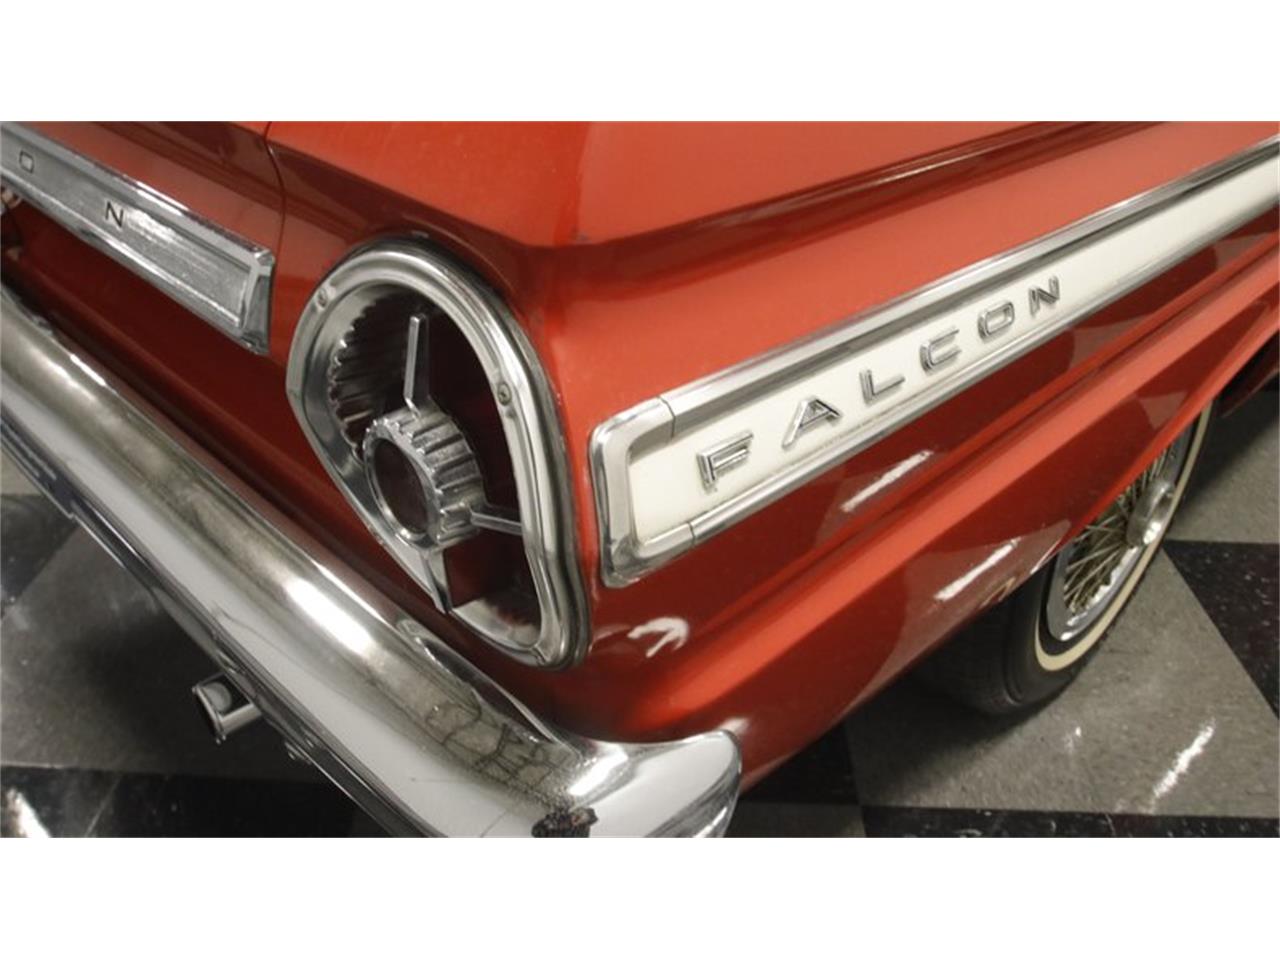 1965 Ford Falcon for sale in Lithia Springs, GA – photo 72